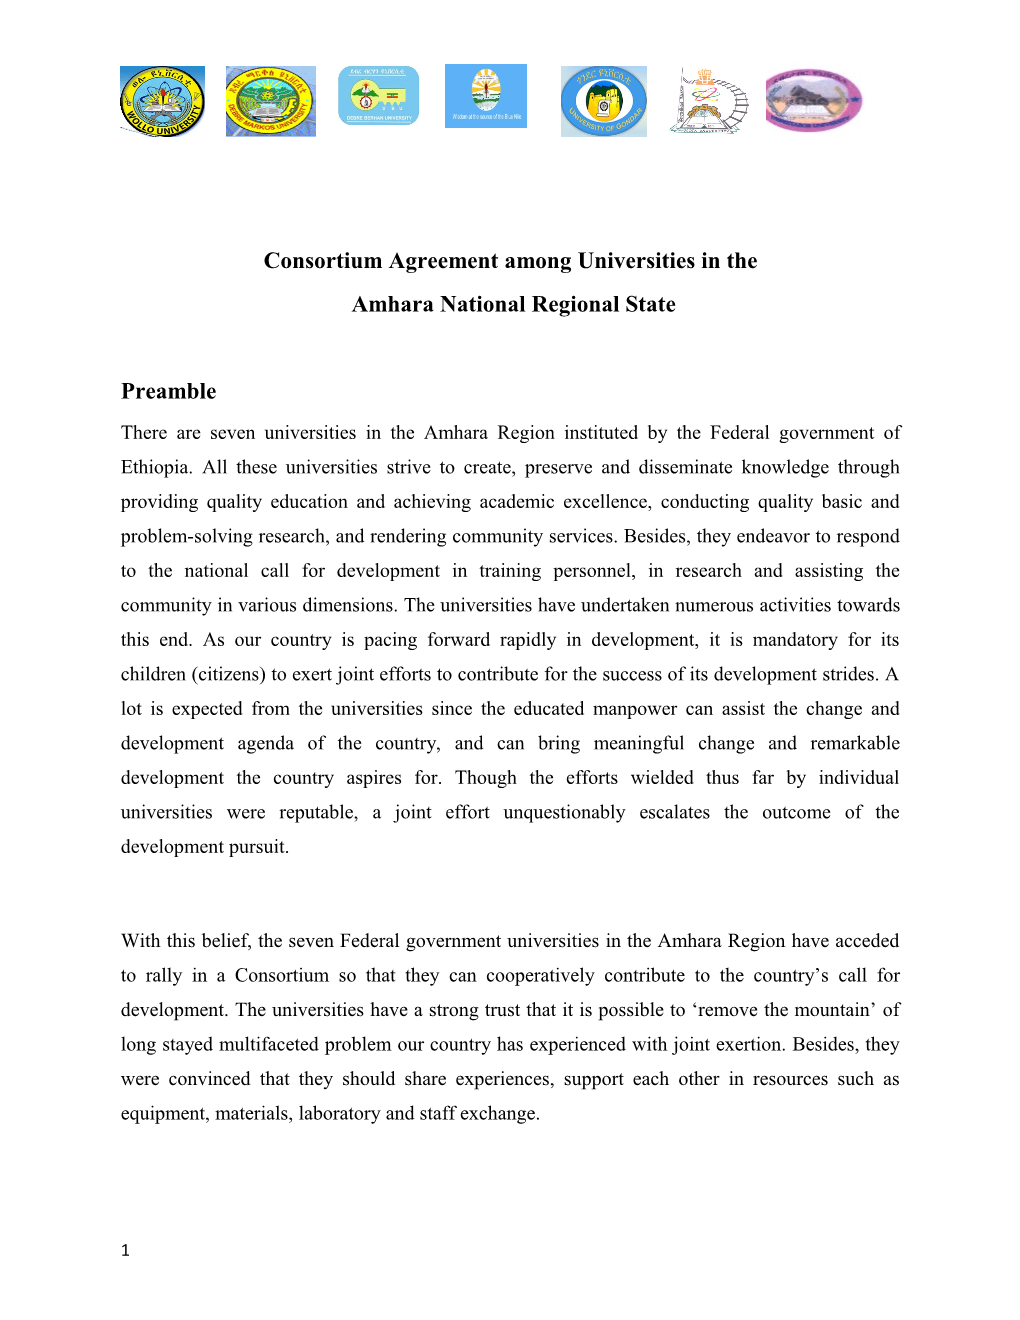 Consortium Agreement Among Universities in The